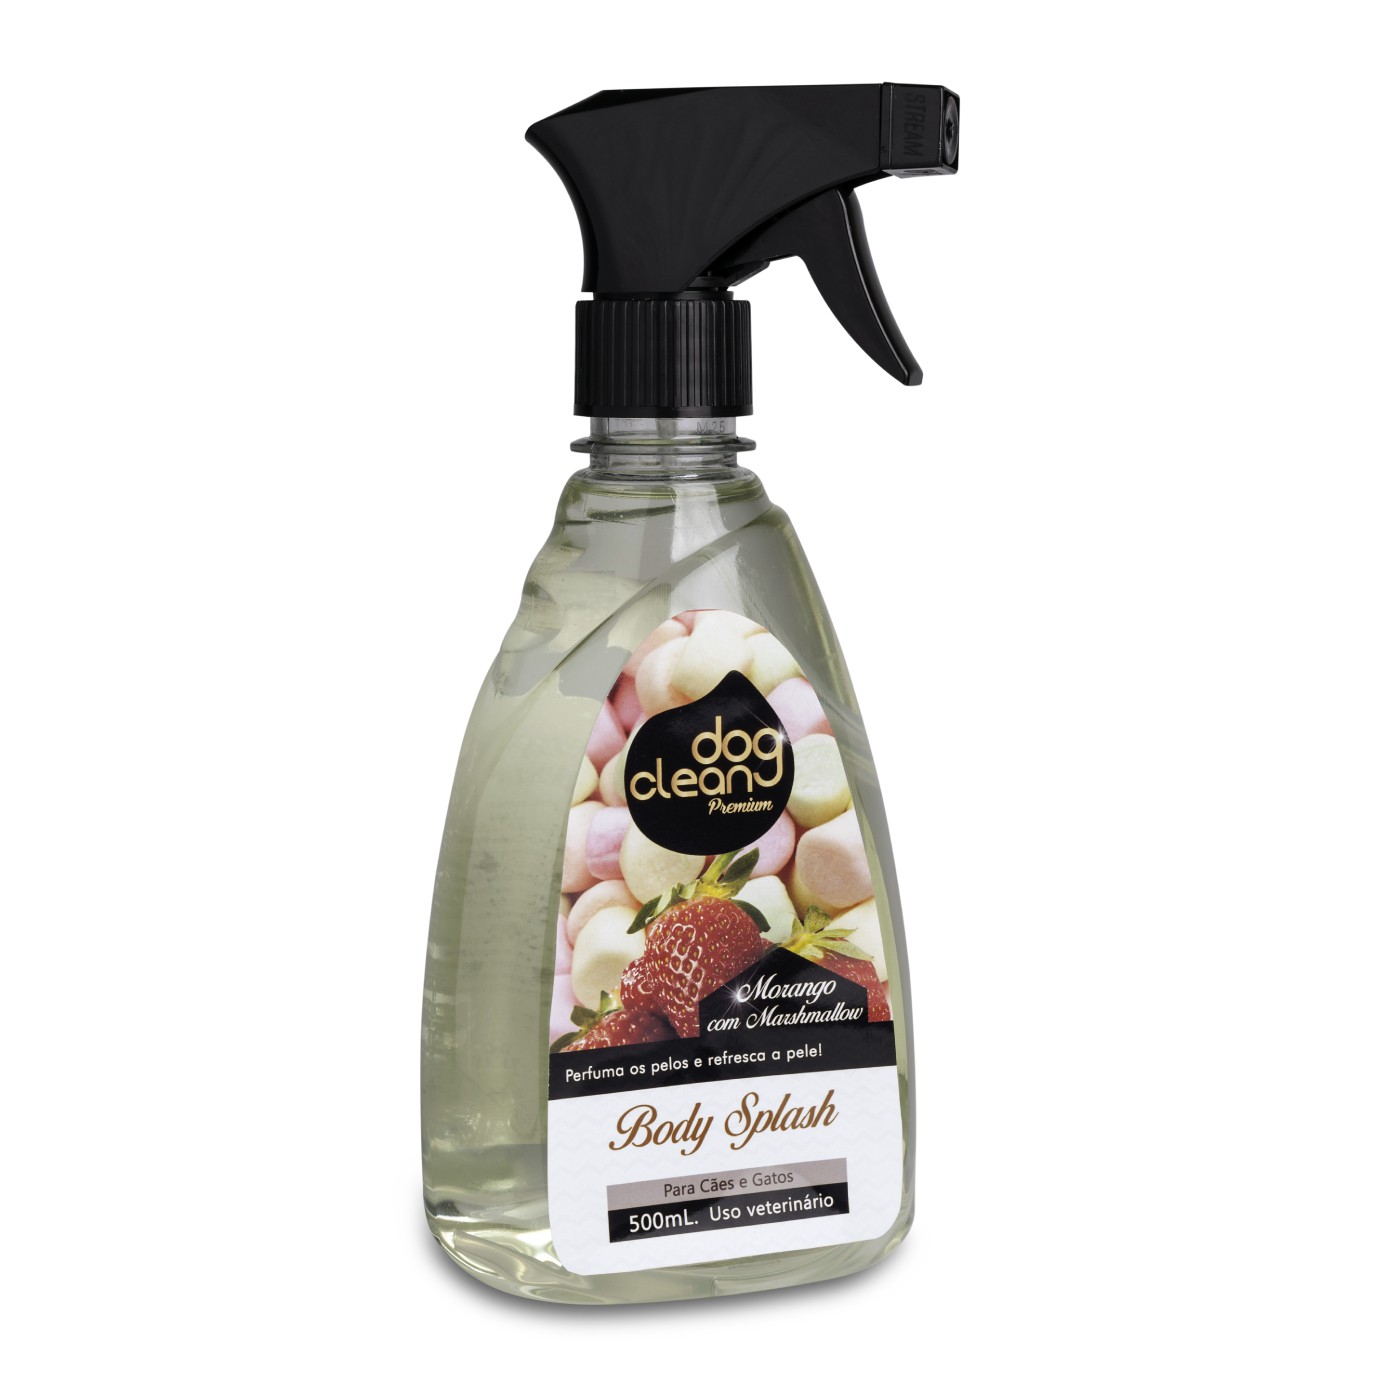 Perfume Body Splash Morango com Marshmallow 500ml Dog Clean